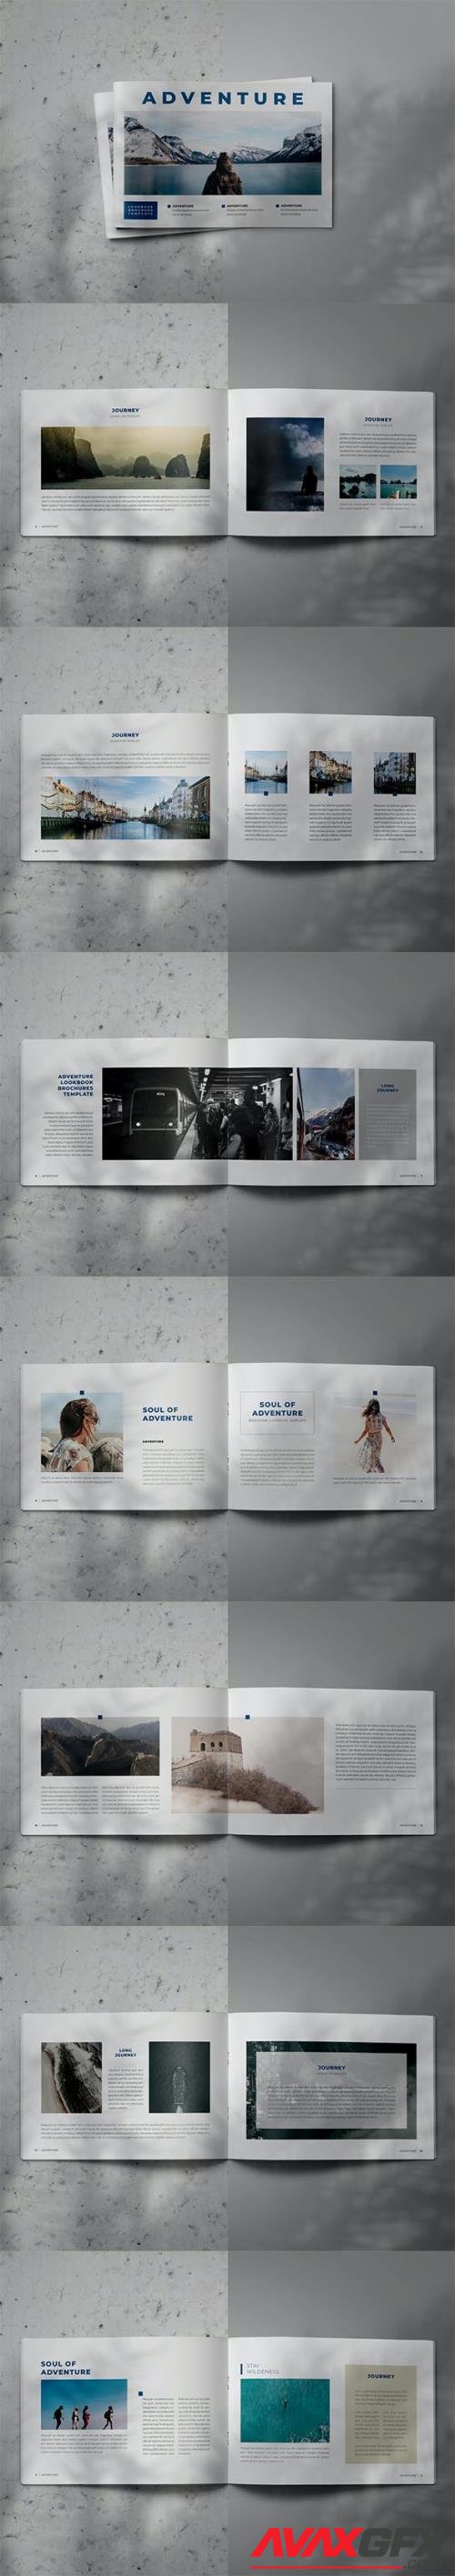 ADVENTURE - Indesign Lookbook Brochure Template